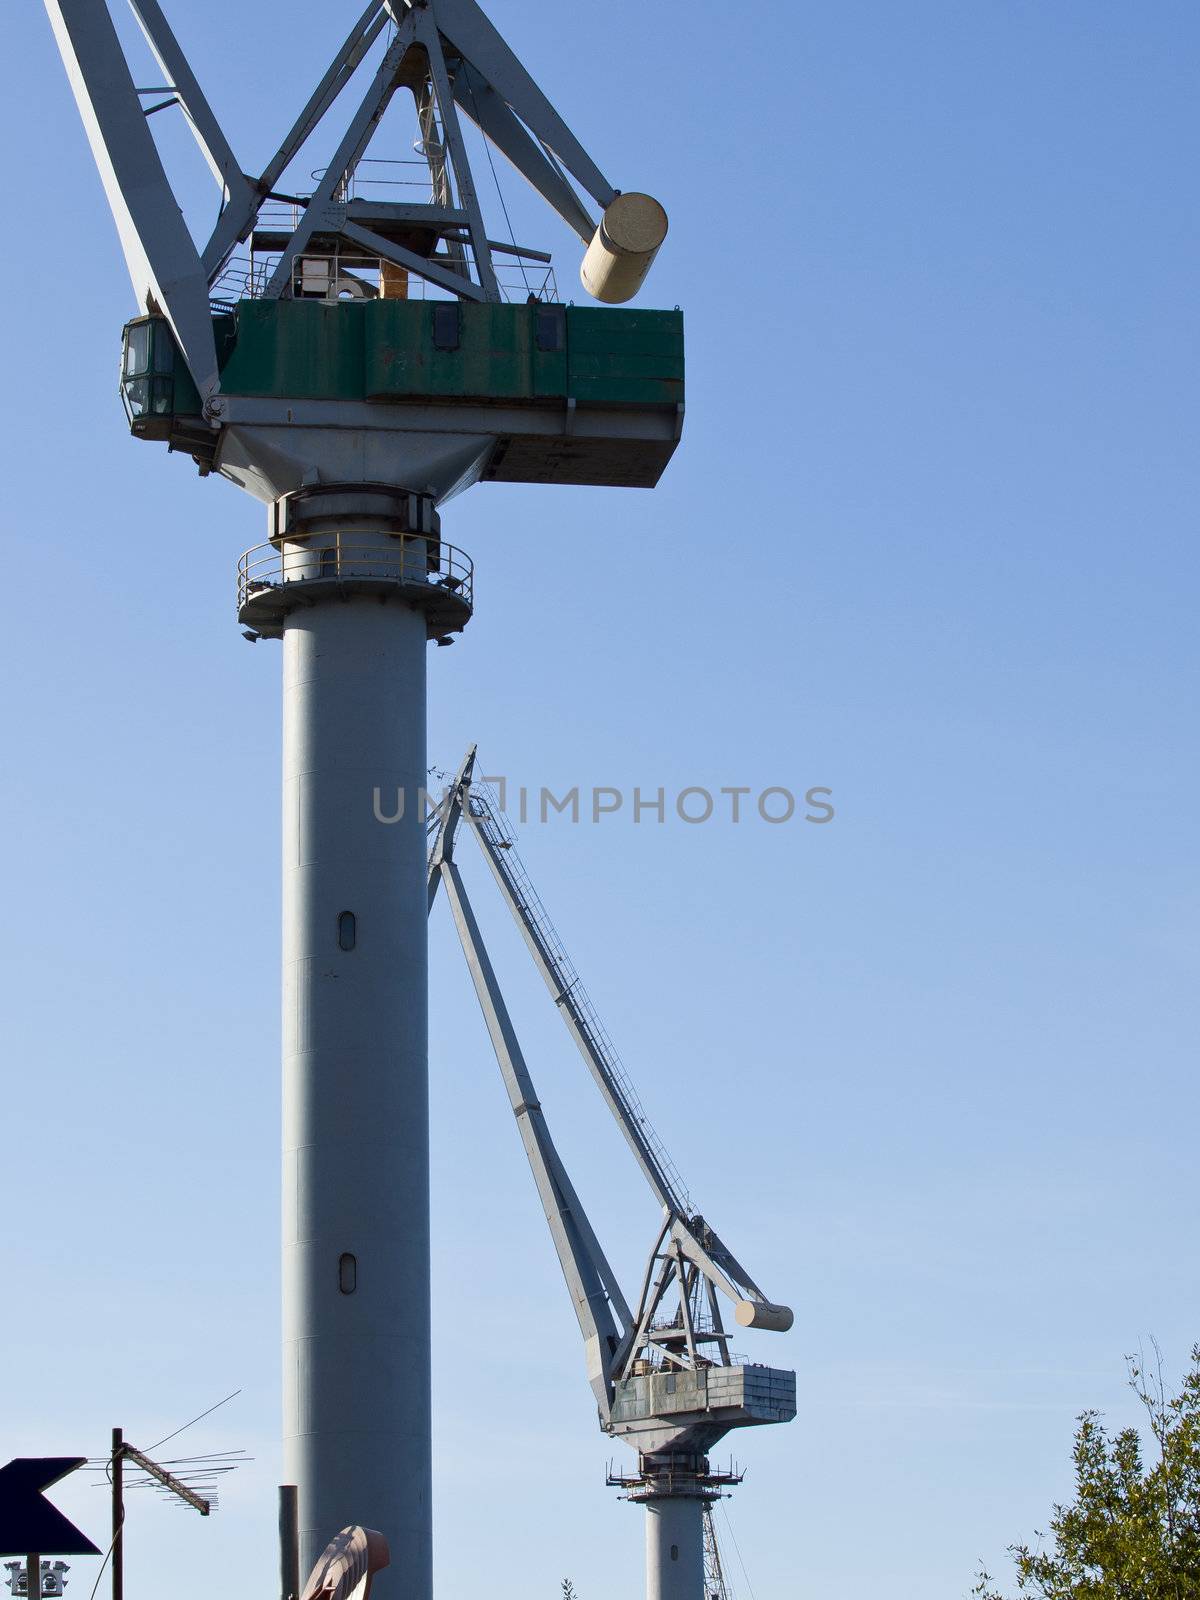 big cranes in the shipyard